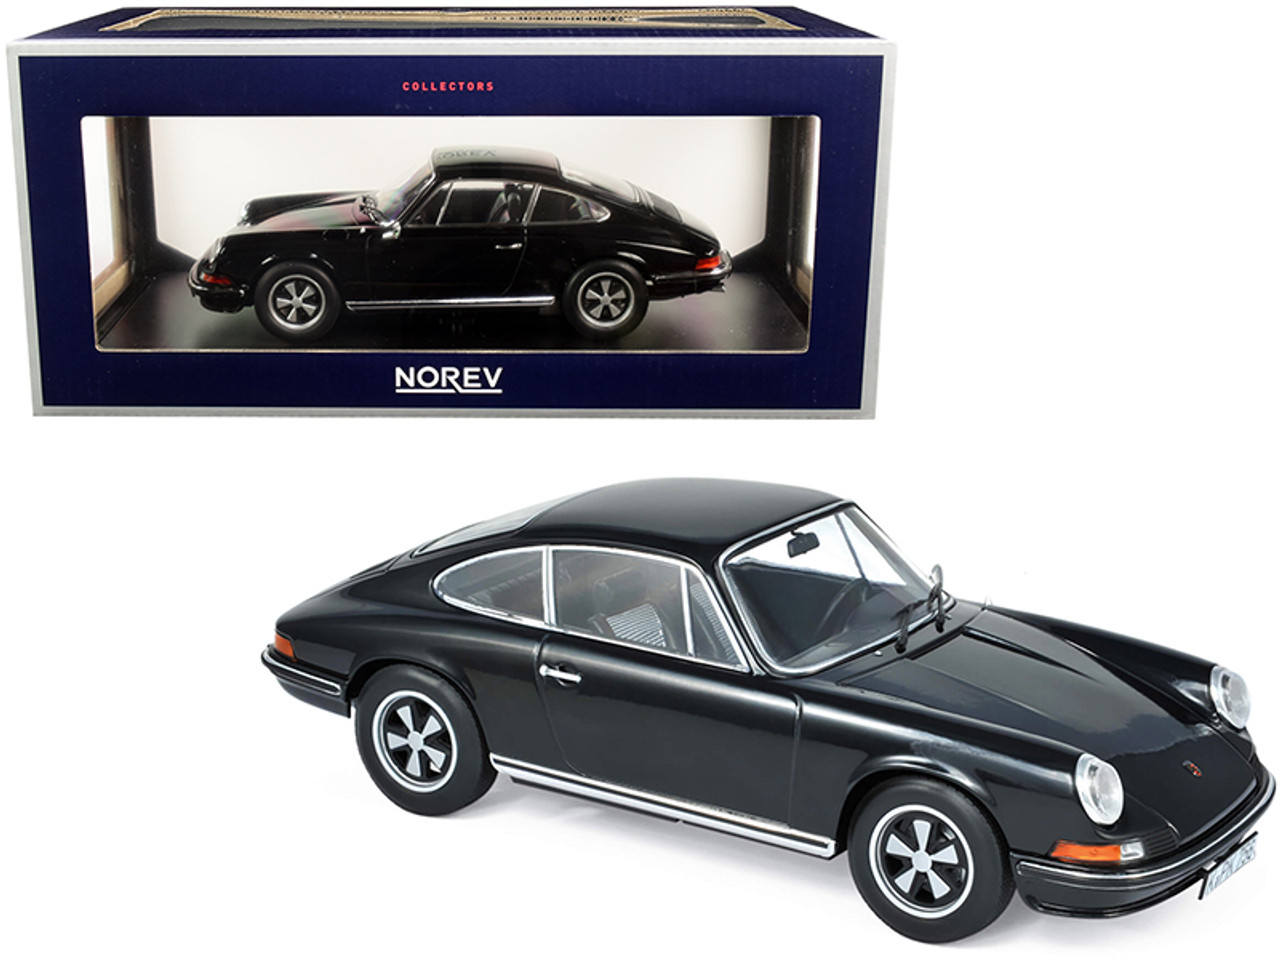 1/18 Norev 1973 Porsche 911 S (Black) Diecast Car Model